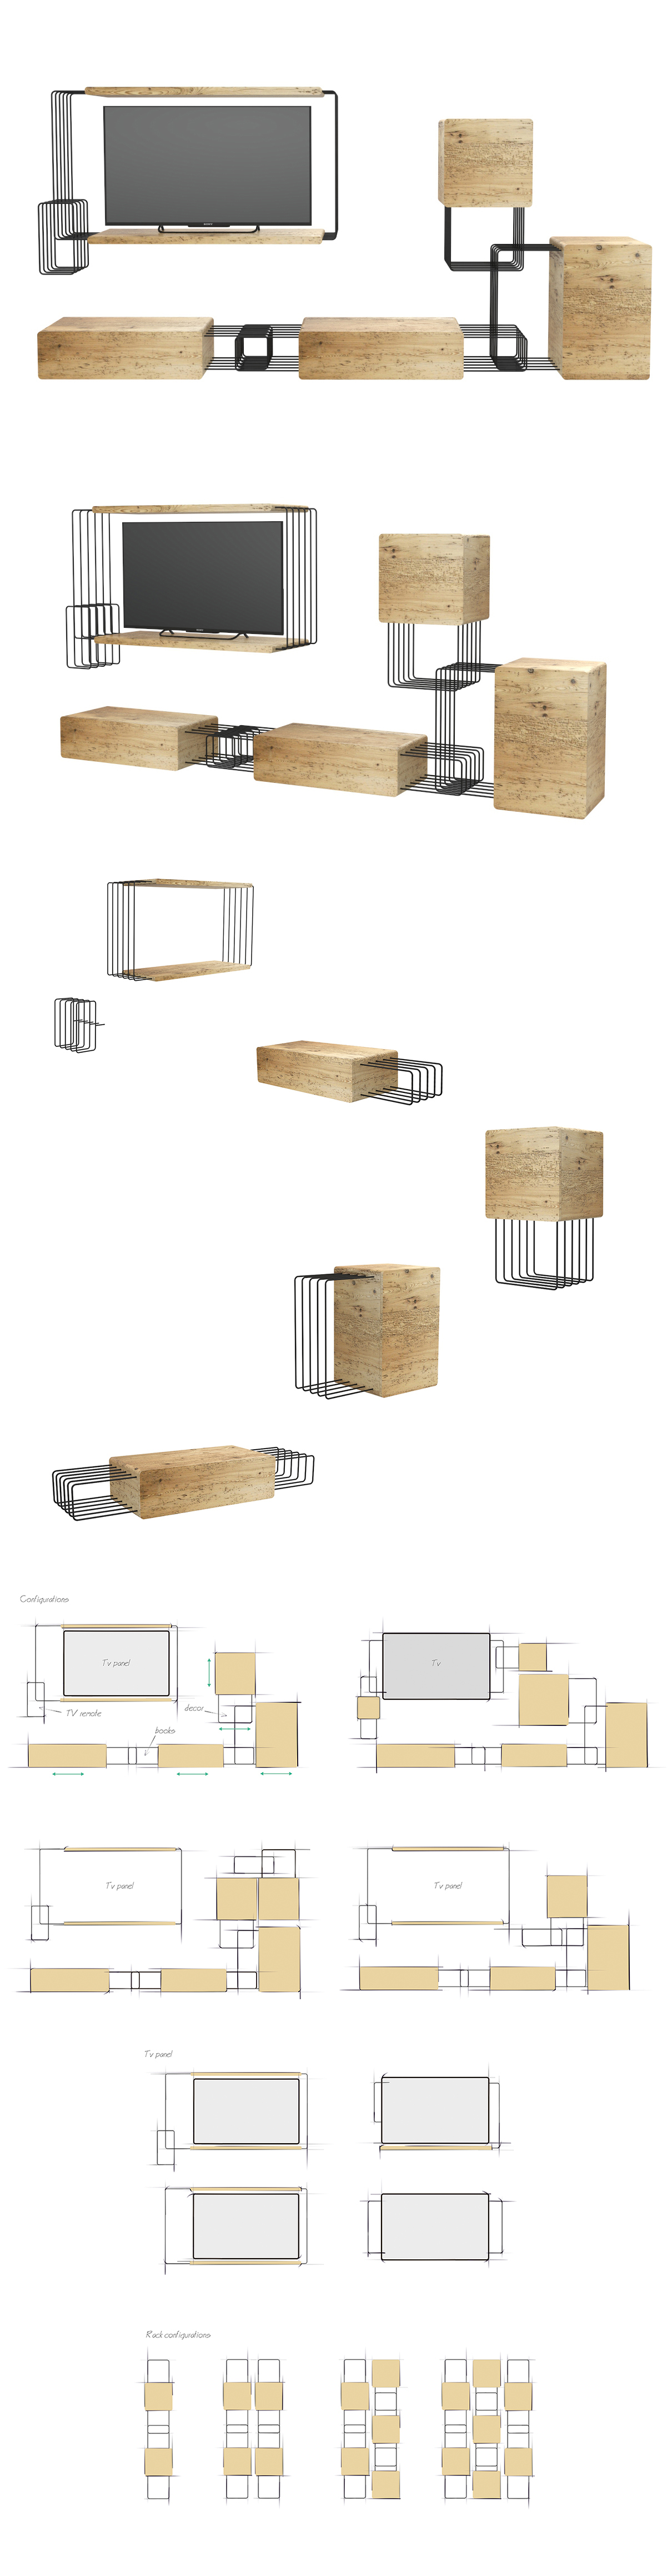 num-set-of furniture-pawlowska-design